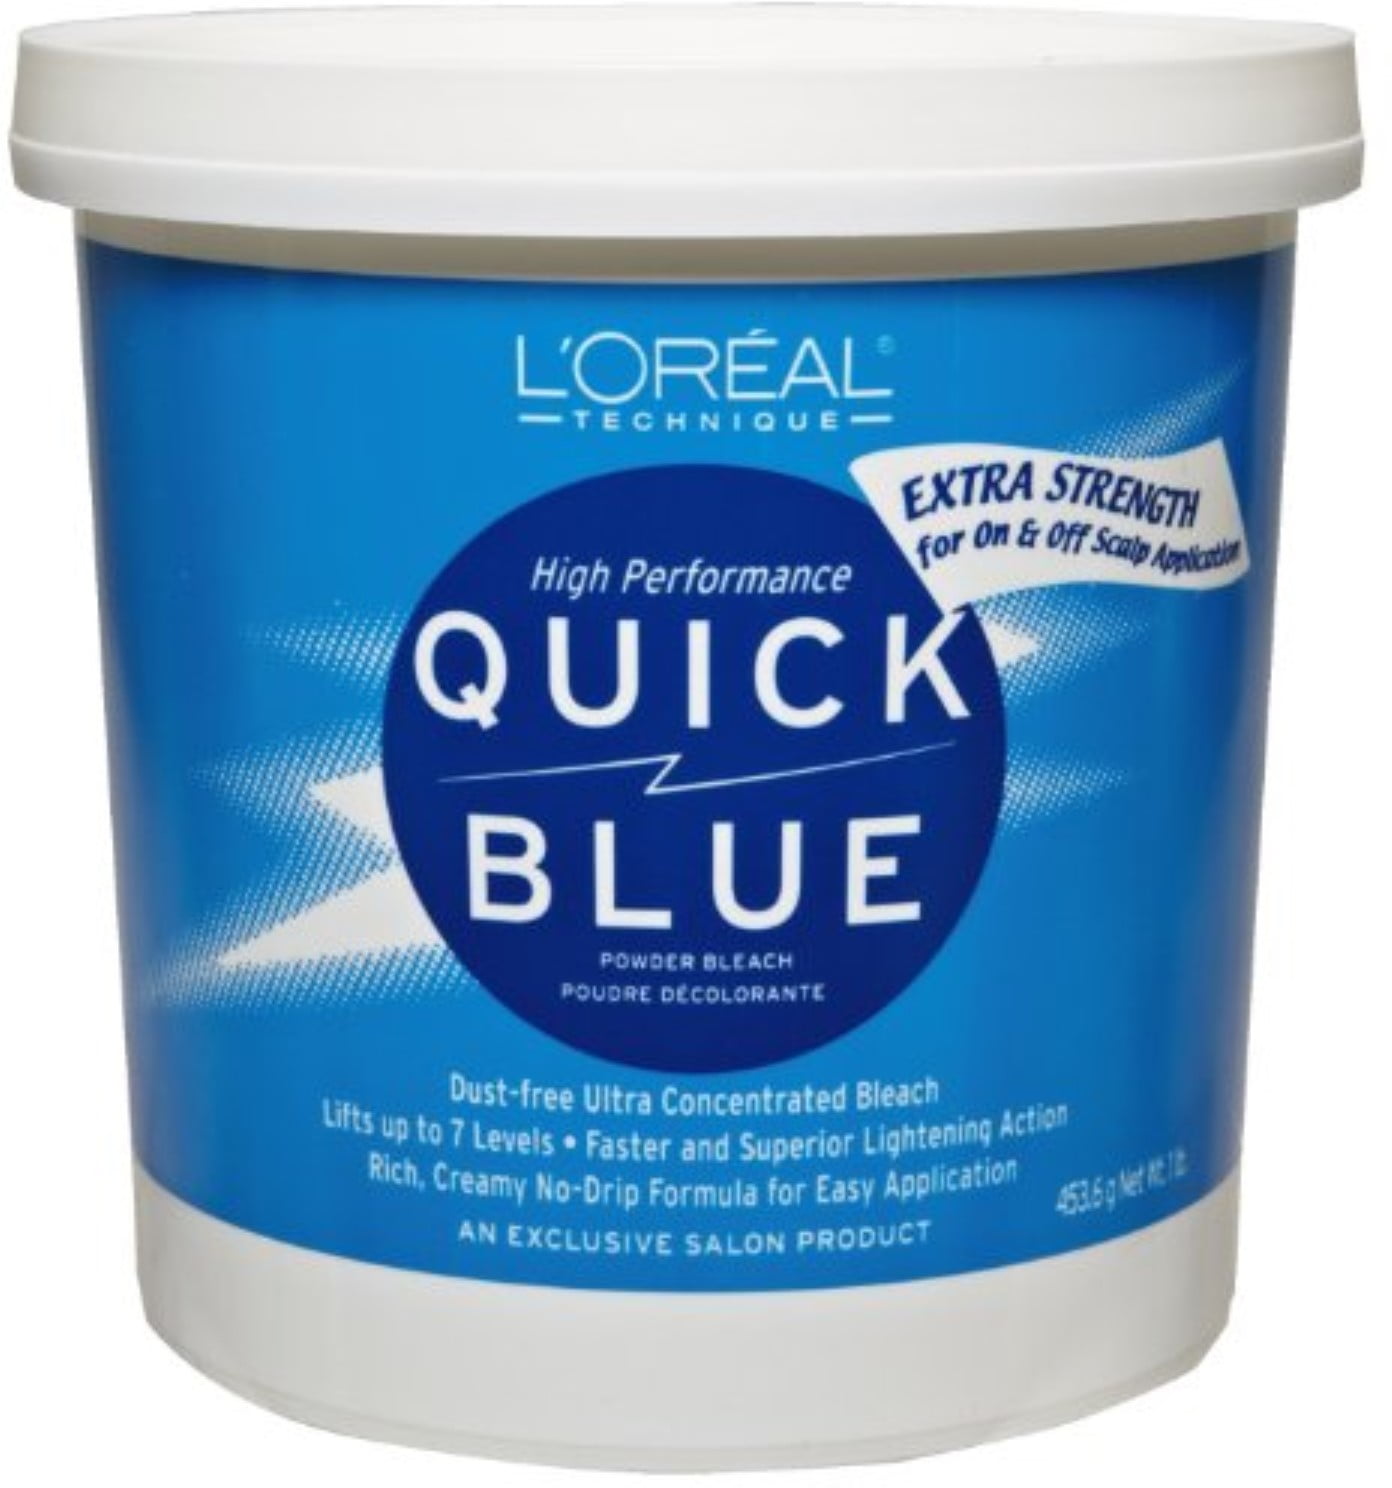 LOreal Quick Blue Powder Bleach 1 Lb Walmartcom